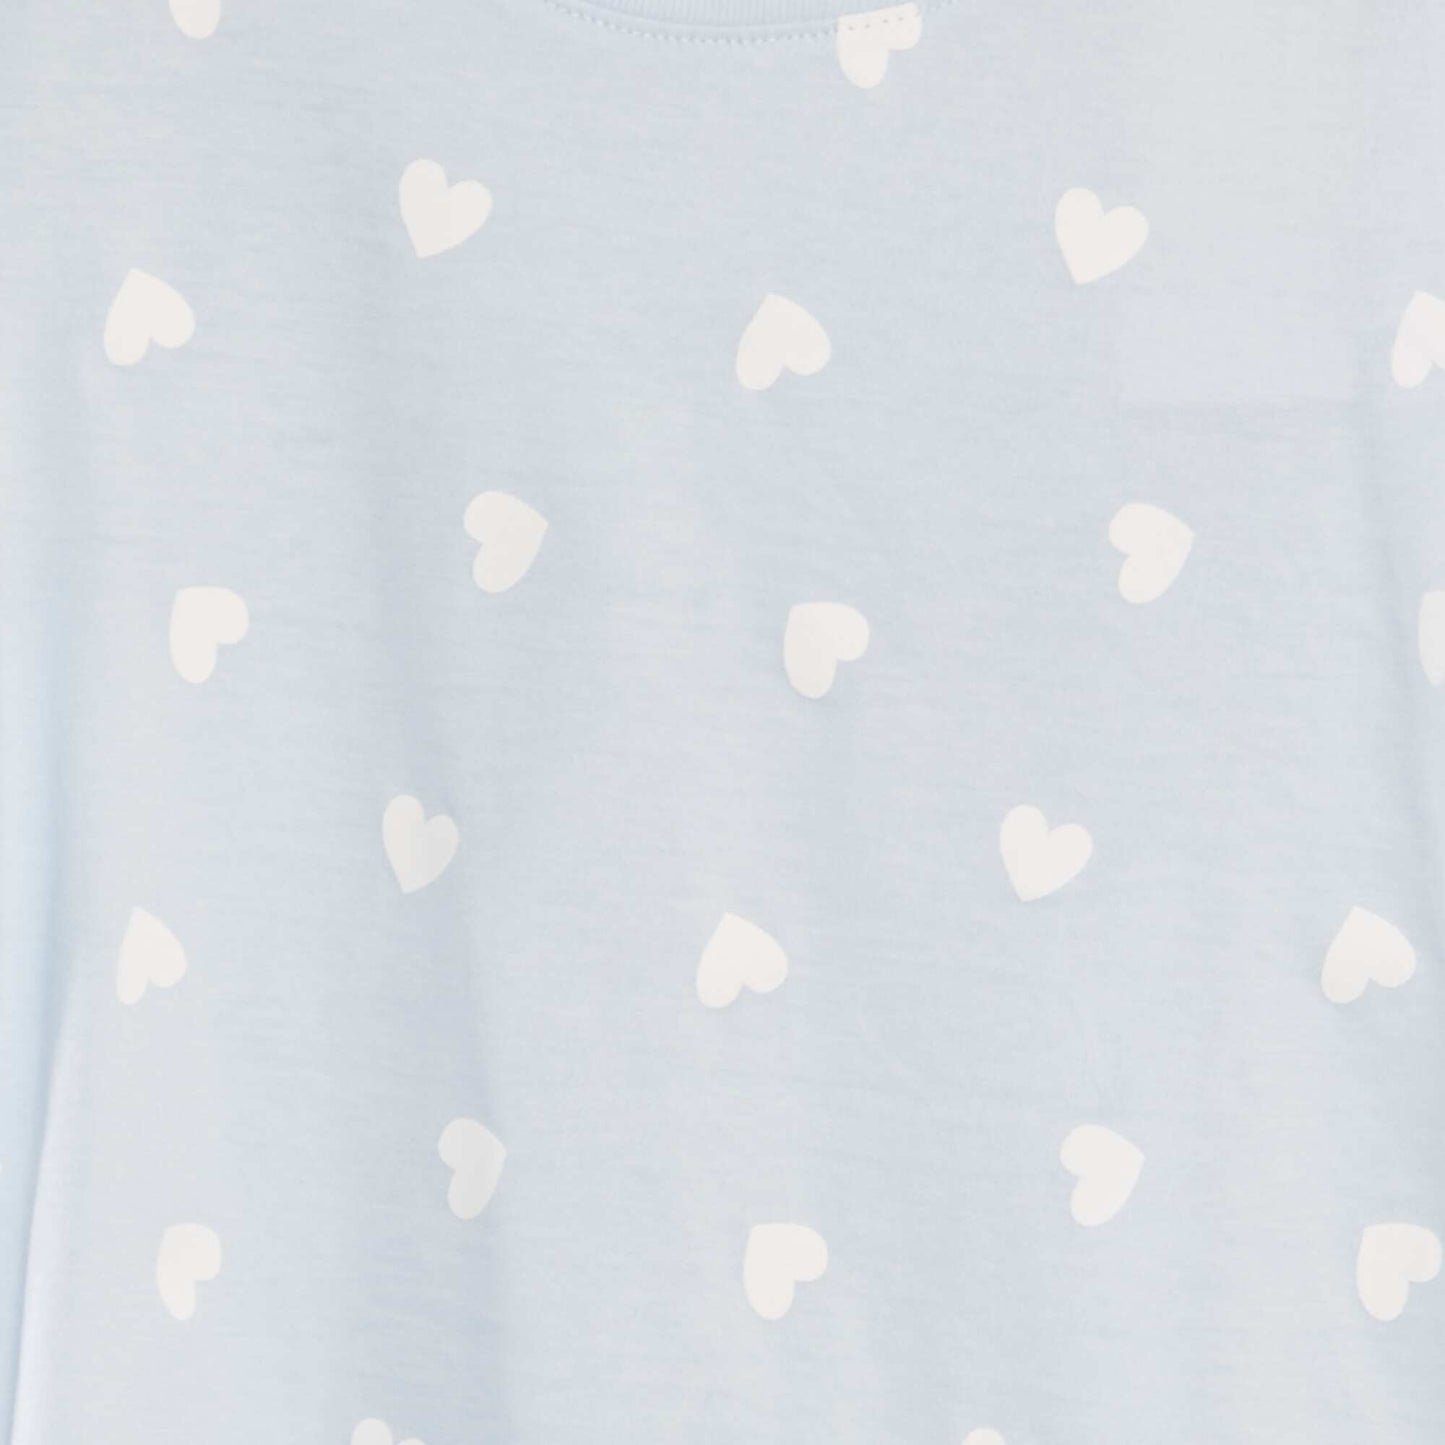 Ensemble de pyjama : T-shirt + short - 2 pièces Bleu clair